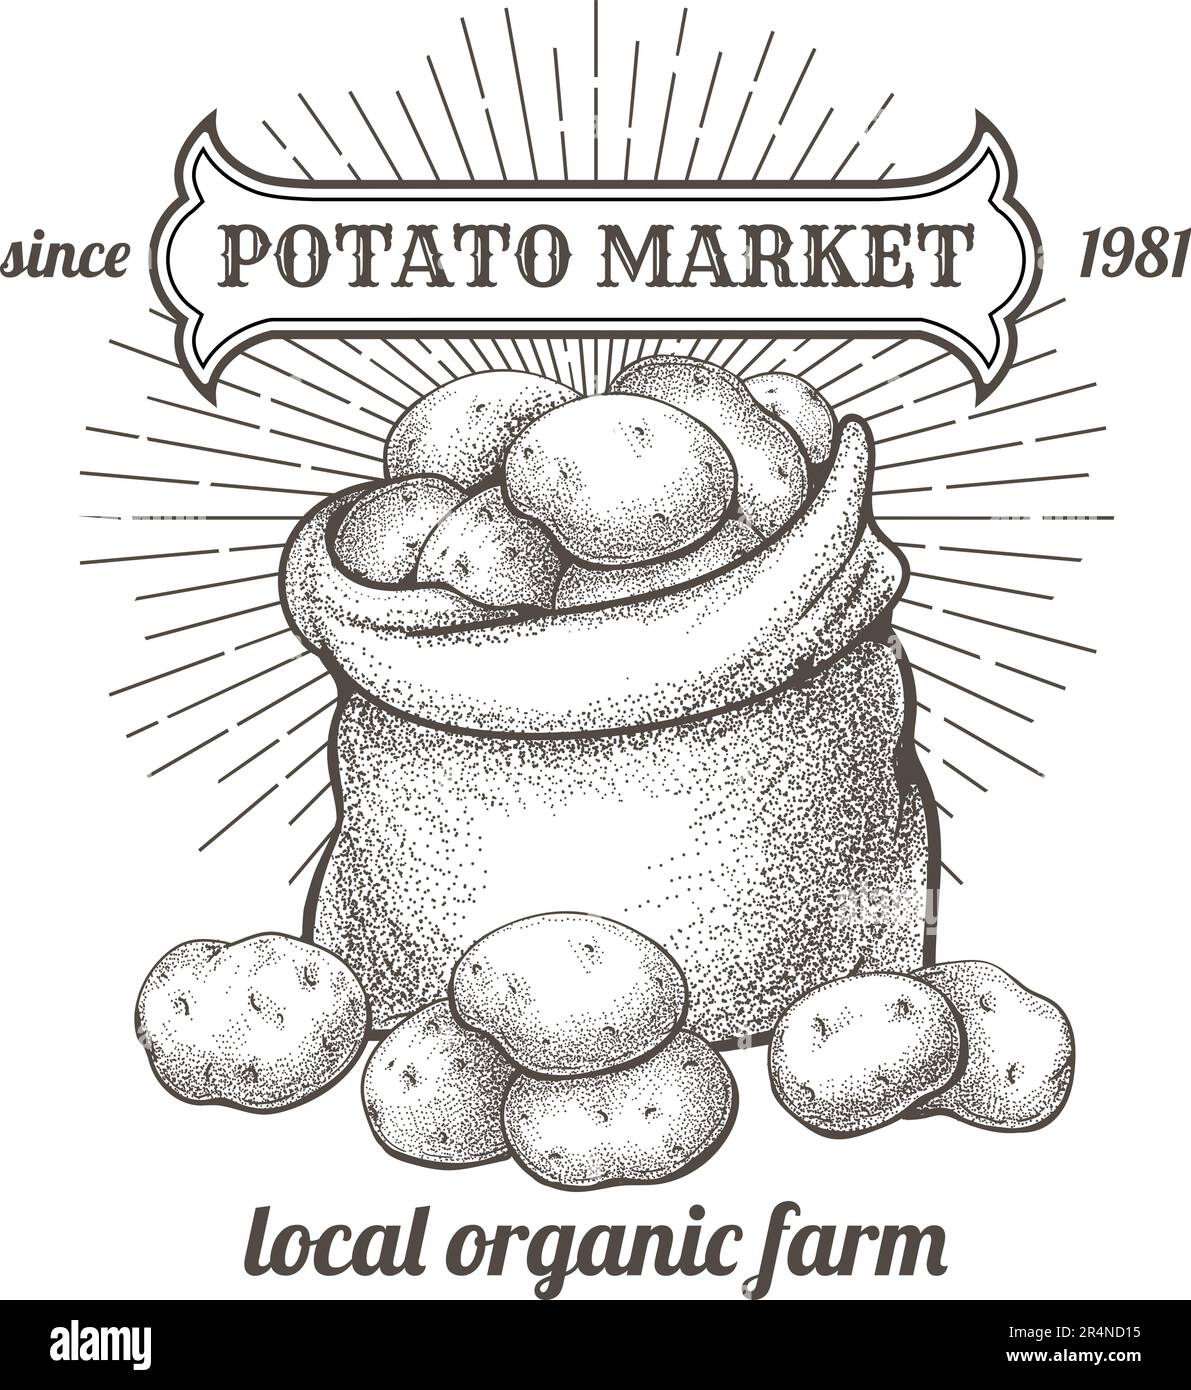 Potato market engraving retro emblem Stock Vector